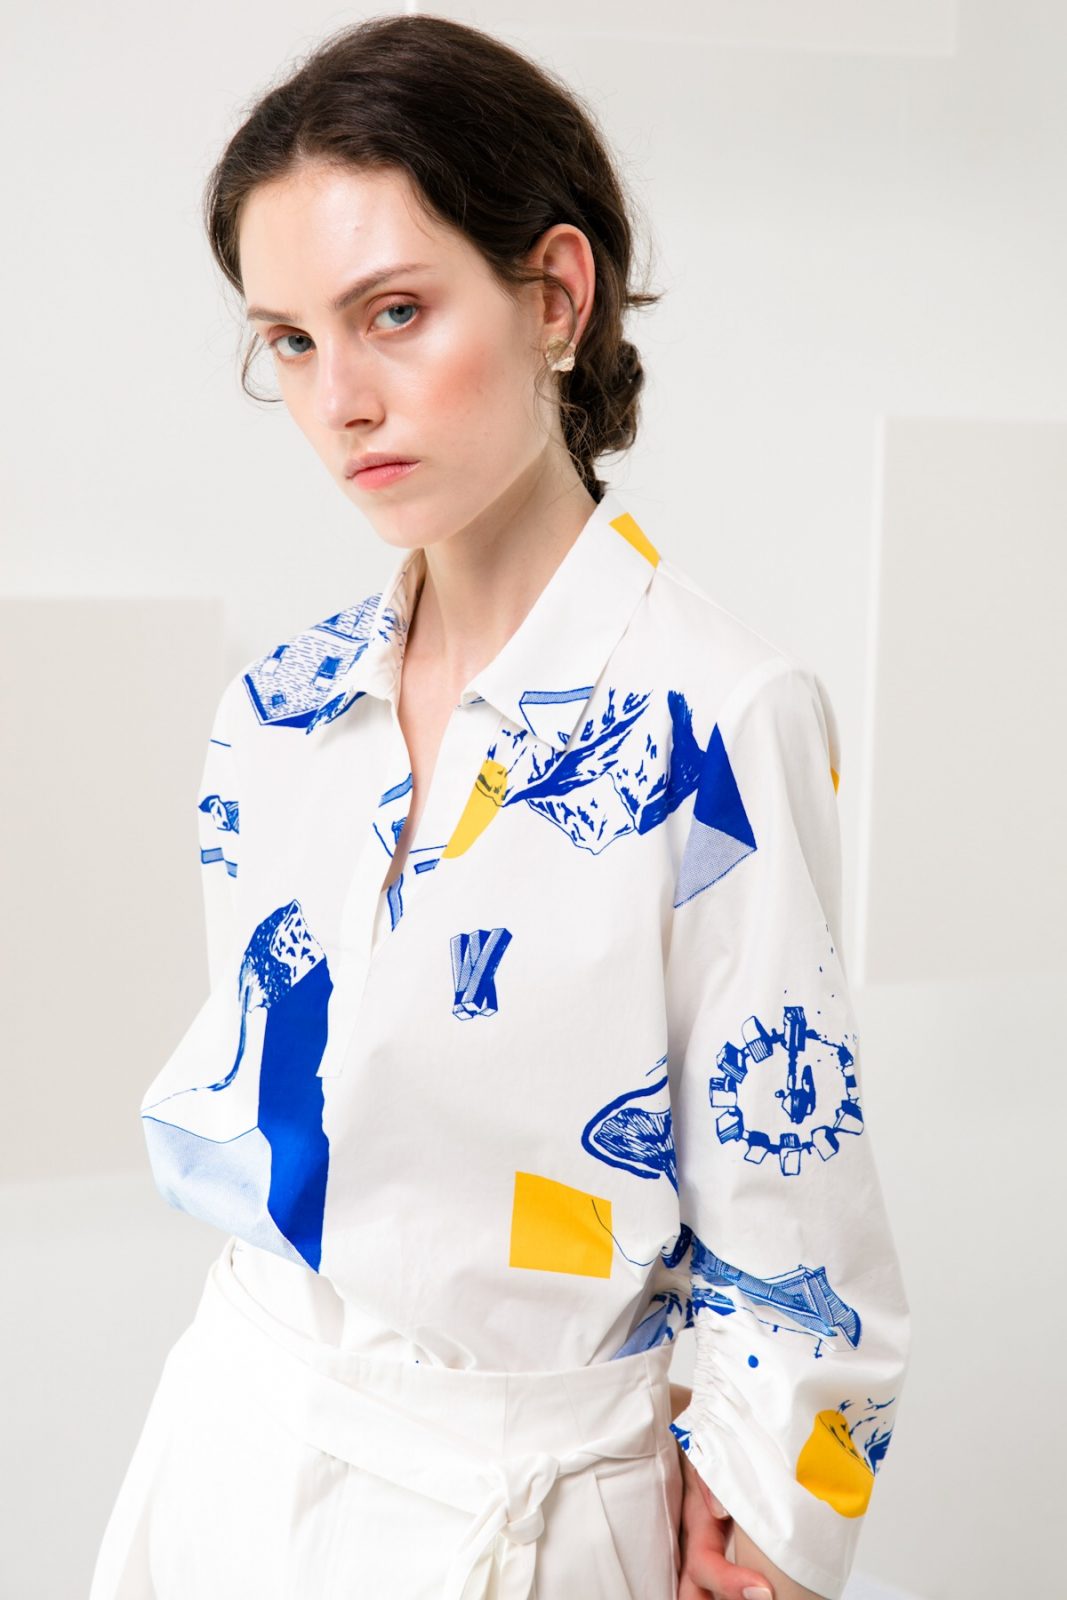 SKYE modern minimalist women clothing fashion Murphy 3:4 sleeve shirt interstellar 2